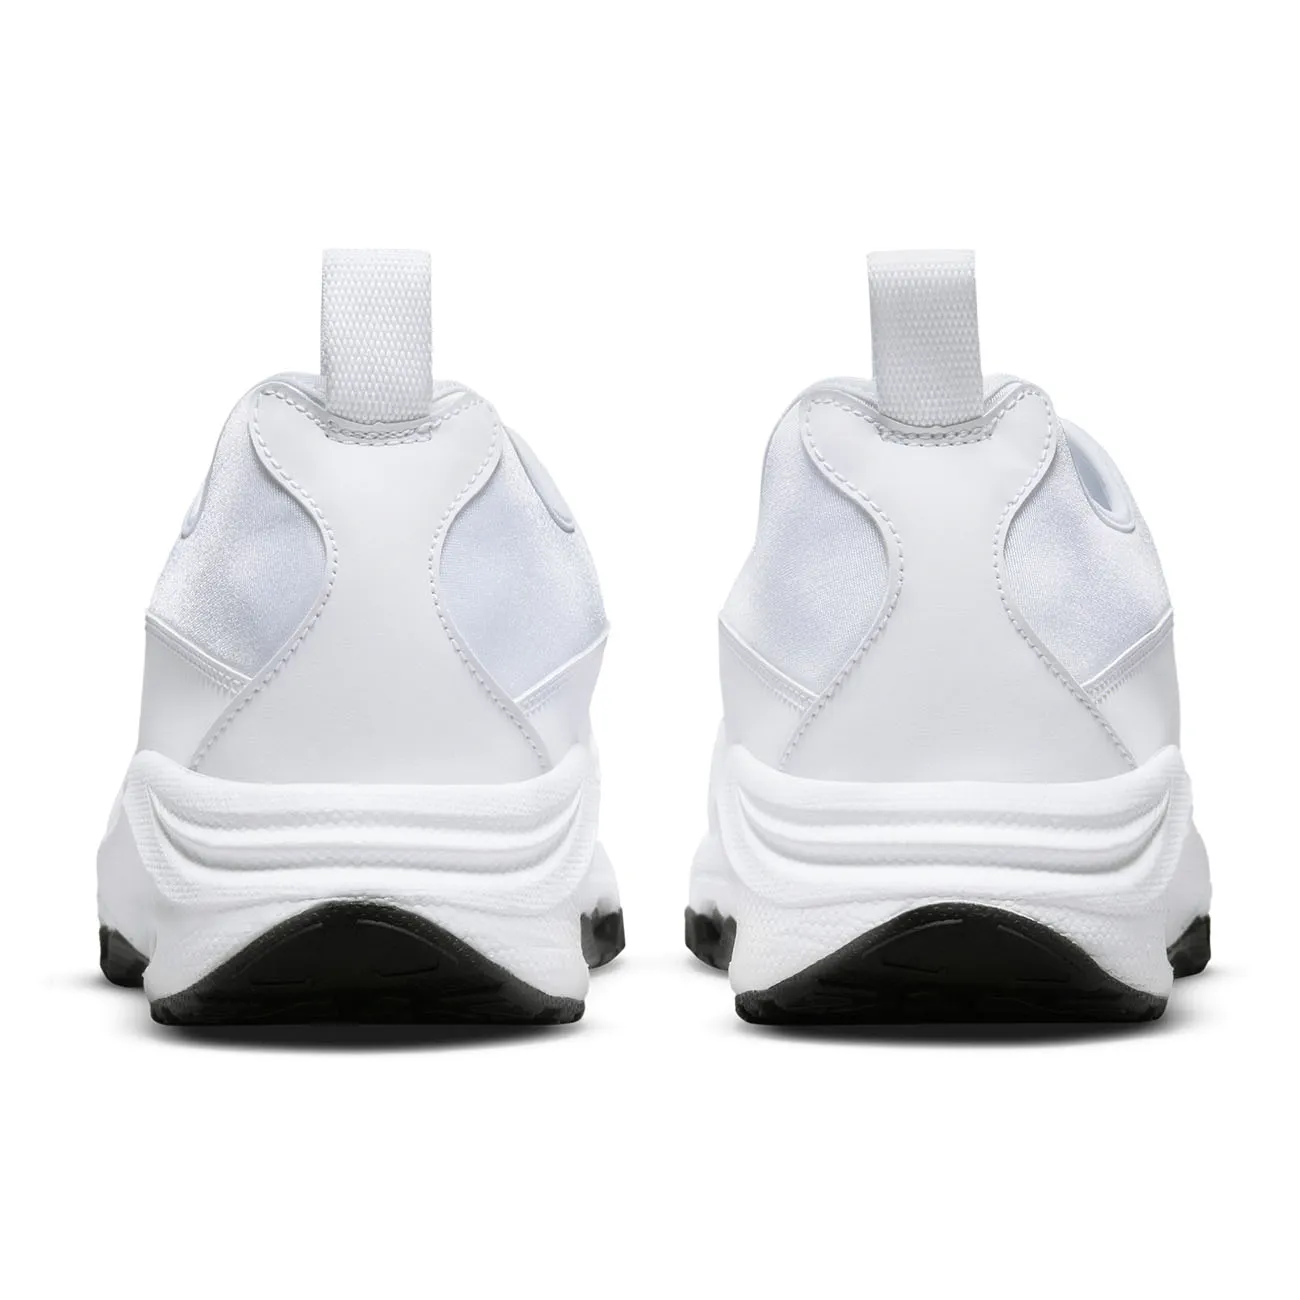 Comme des Garçons x Nike Air Max Sunder "Triple White"